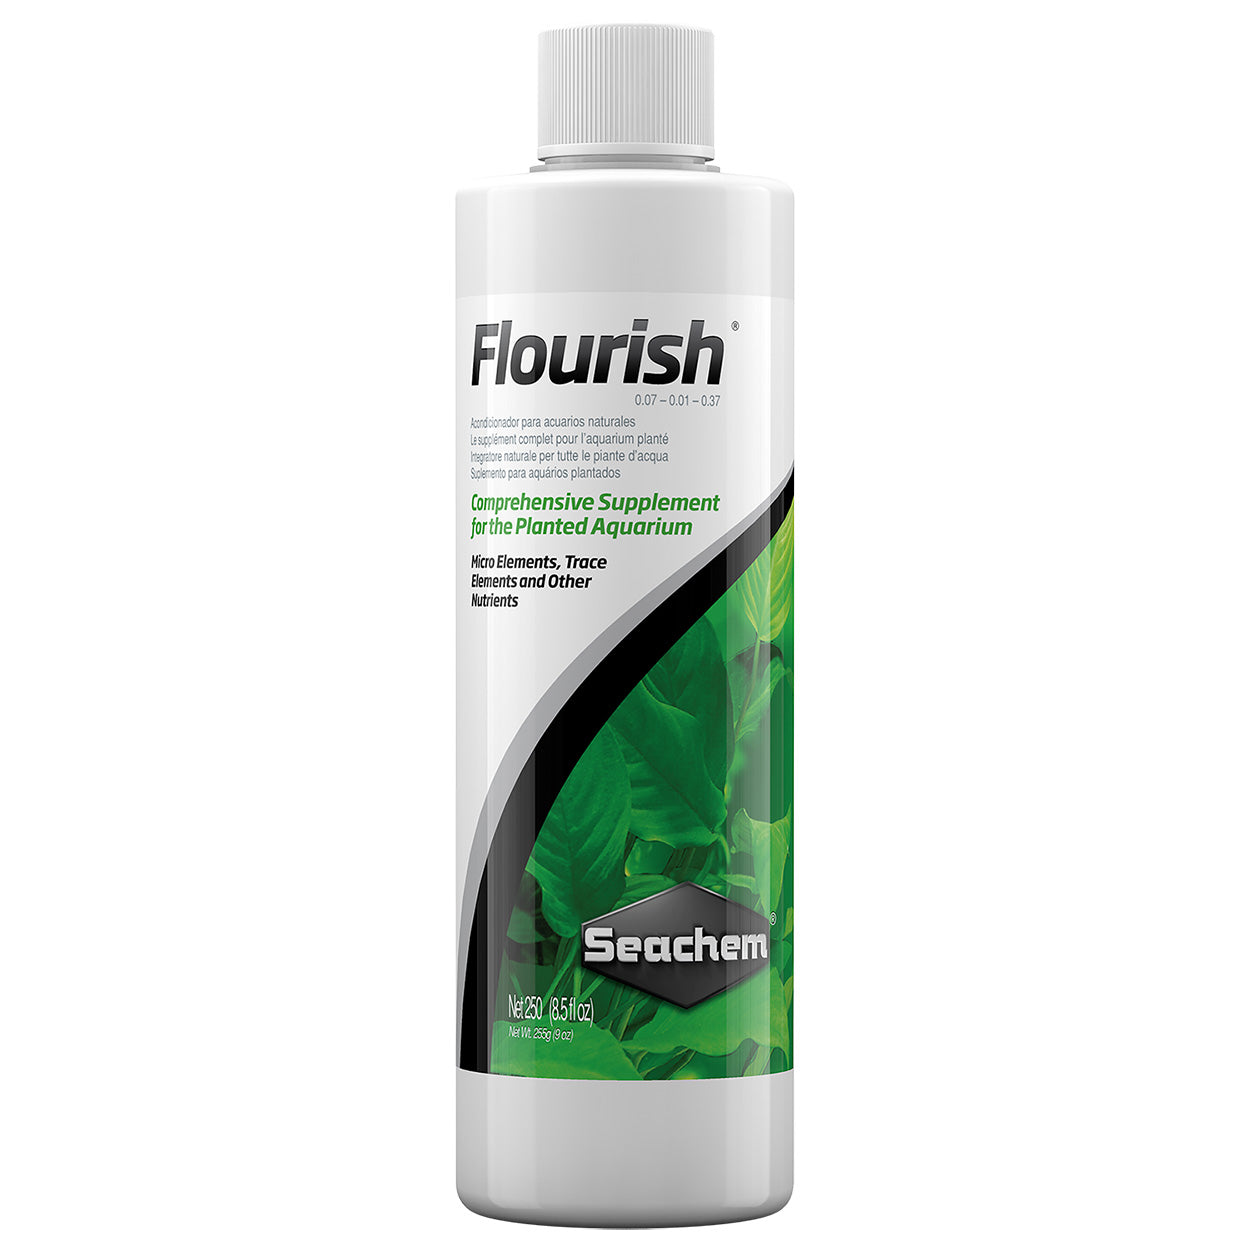 Seachem Flourish 250ml For Sale | Live Freshwater Plant Fertilizer and Supplement | Seachem laboratories